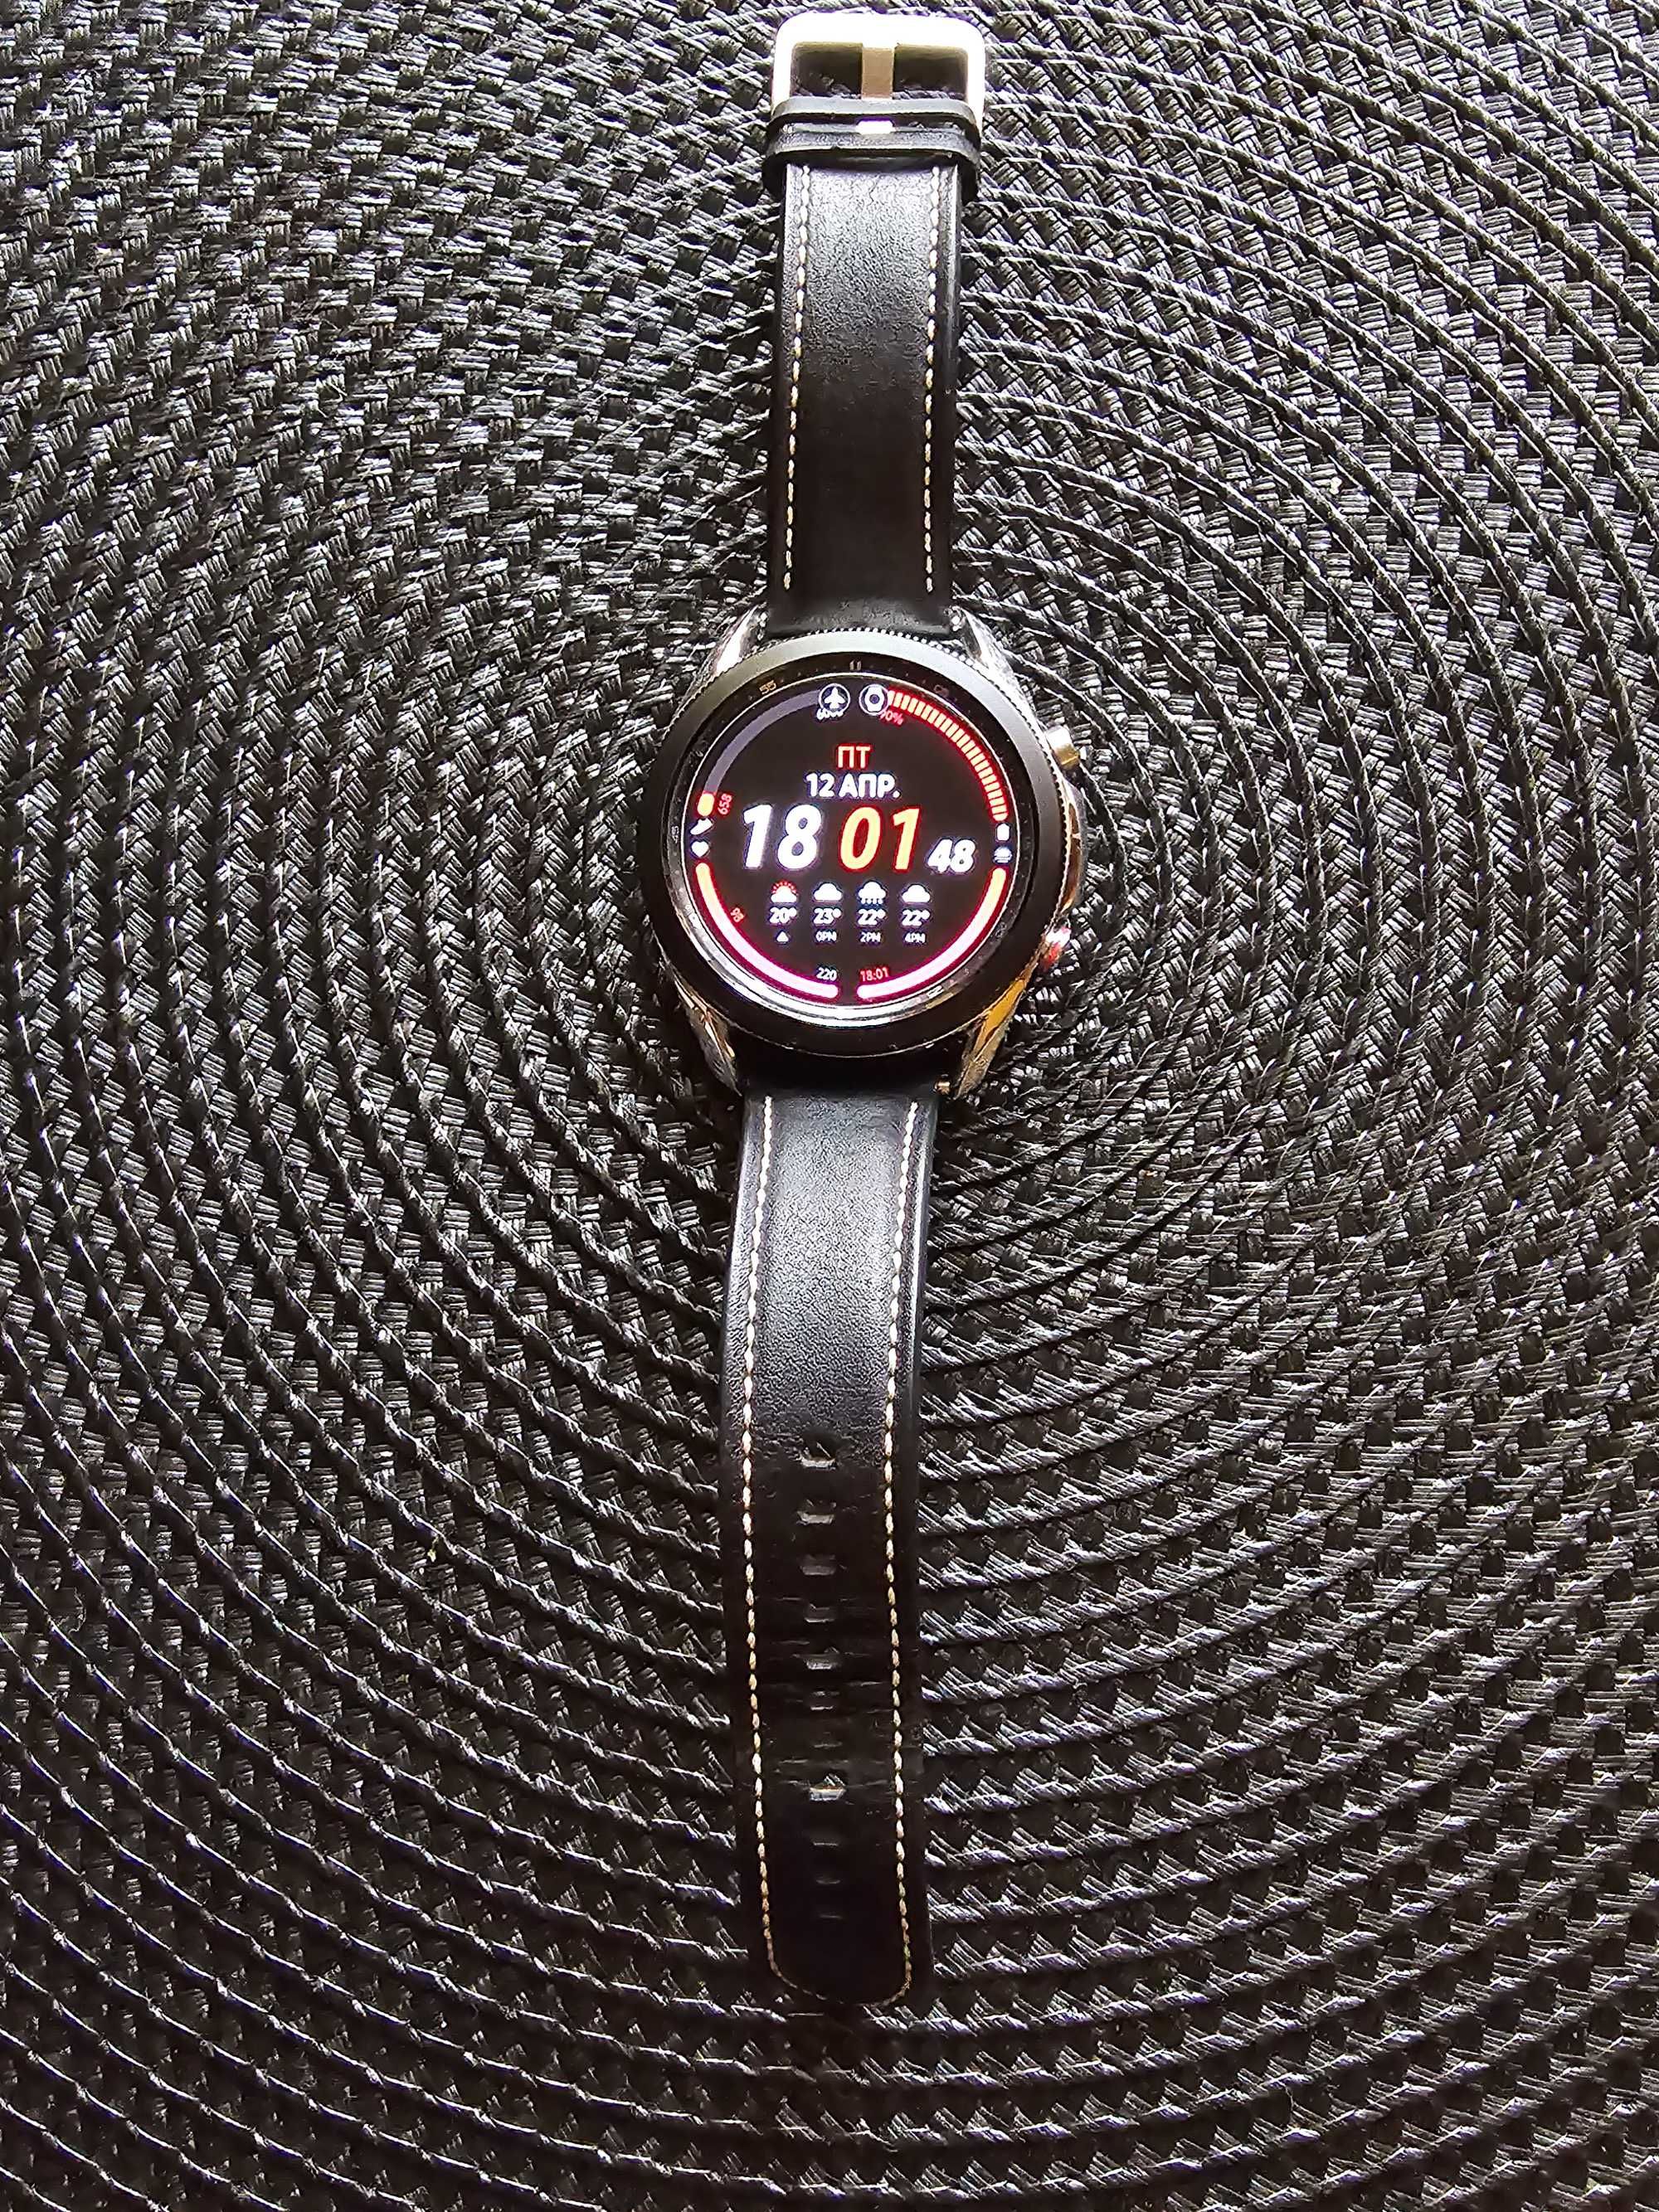 Samsung Galaxy Watch 3 45mm R845 / E-sim / LTE /GPS / Идеальное сост.